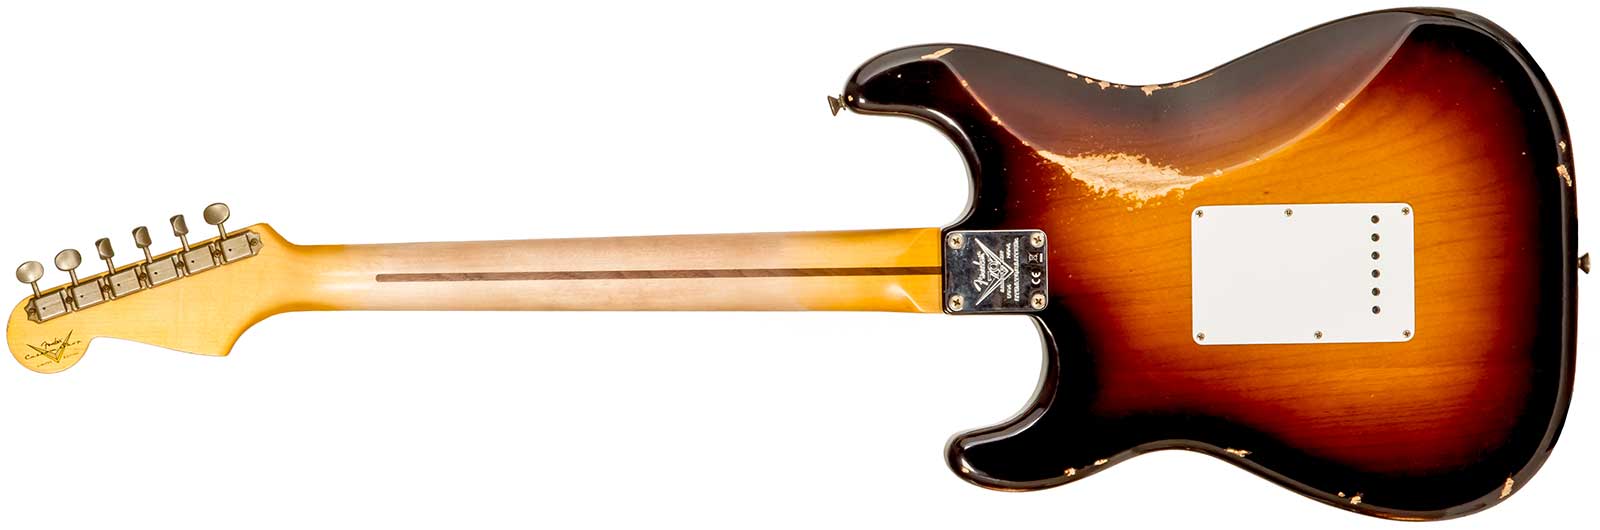 Fender Custom Shop Strat 1954 70th Anniv. 3s Trem Mn #xn4158 - Relic Wide-fade 2-color Sunburst - E-Gitarre in Str-Form - Variation 1